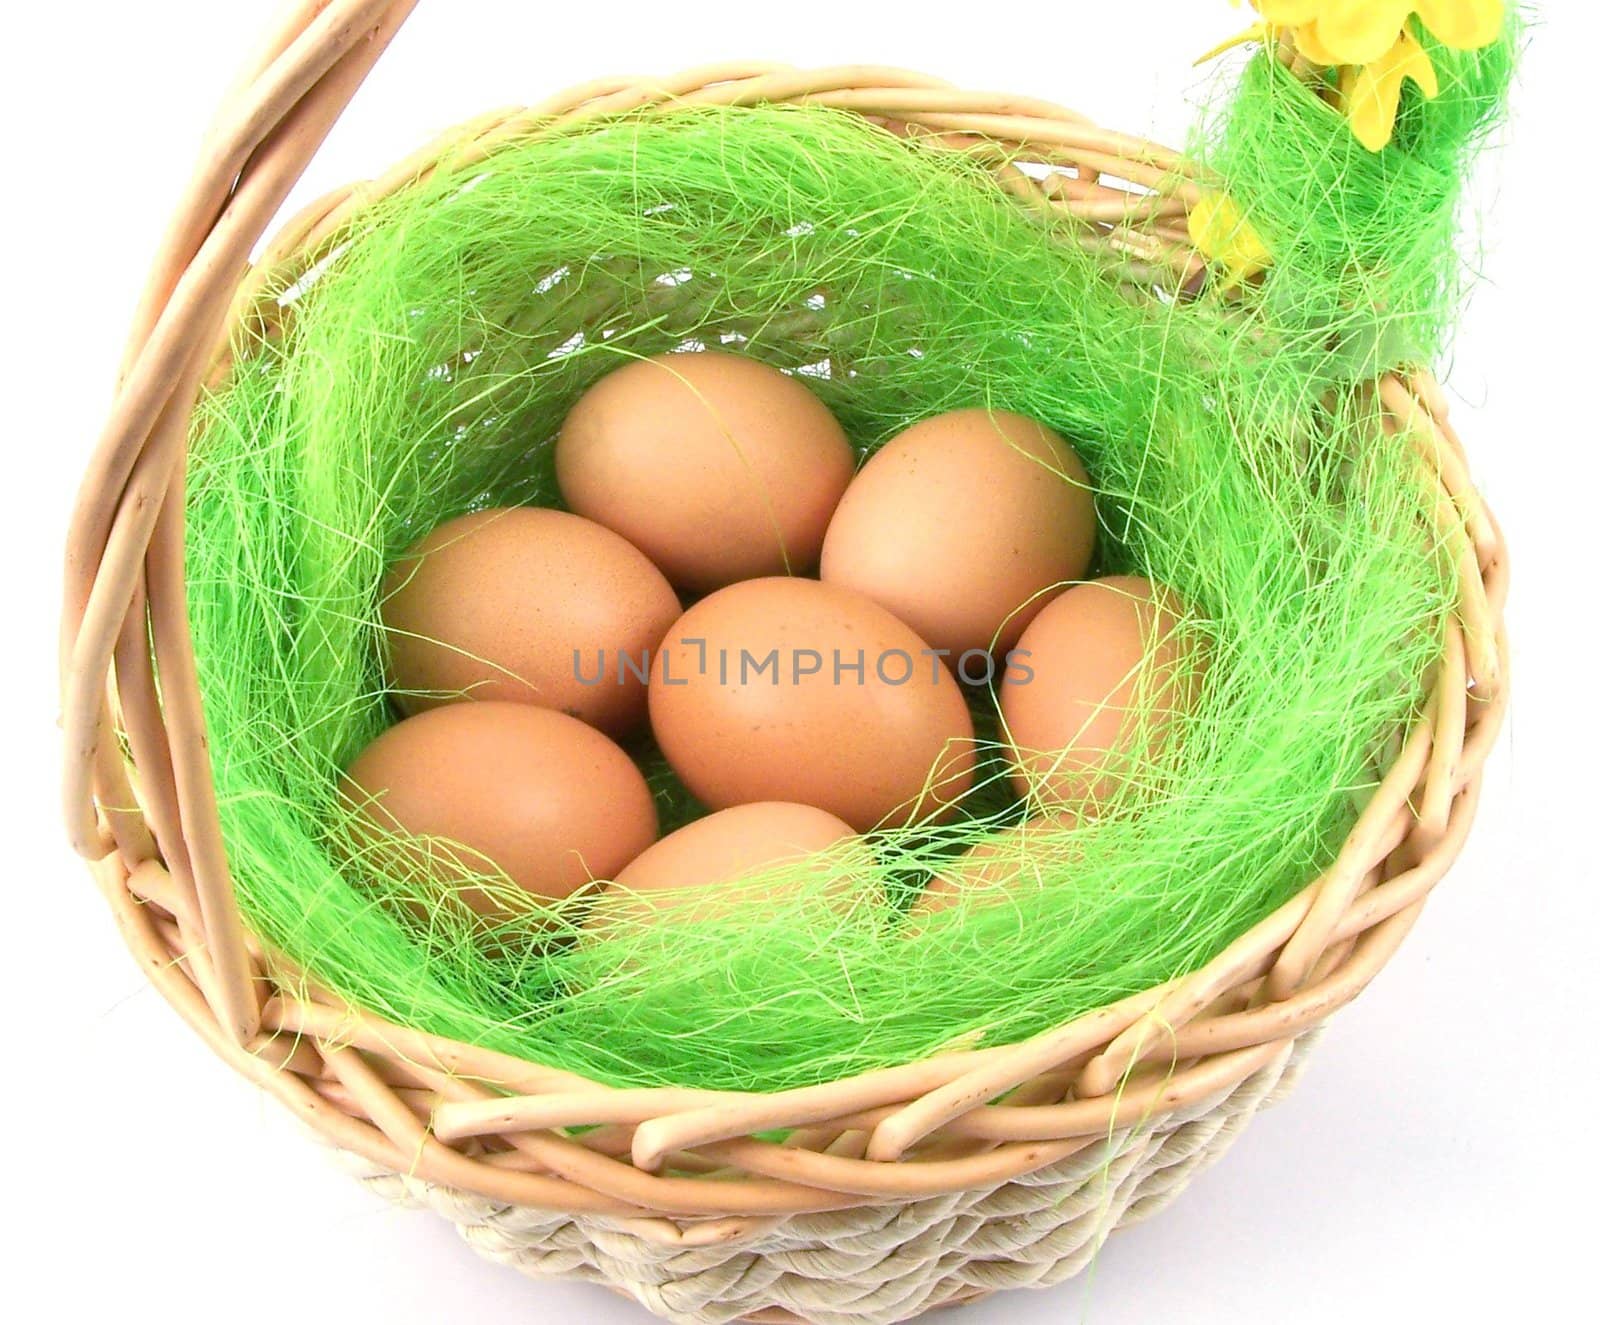 wicker basket with eggs by alexwhite